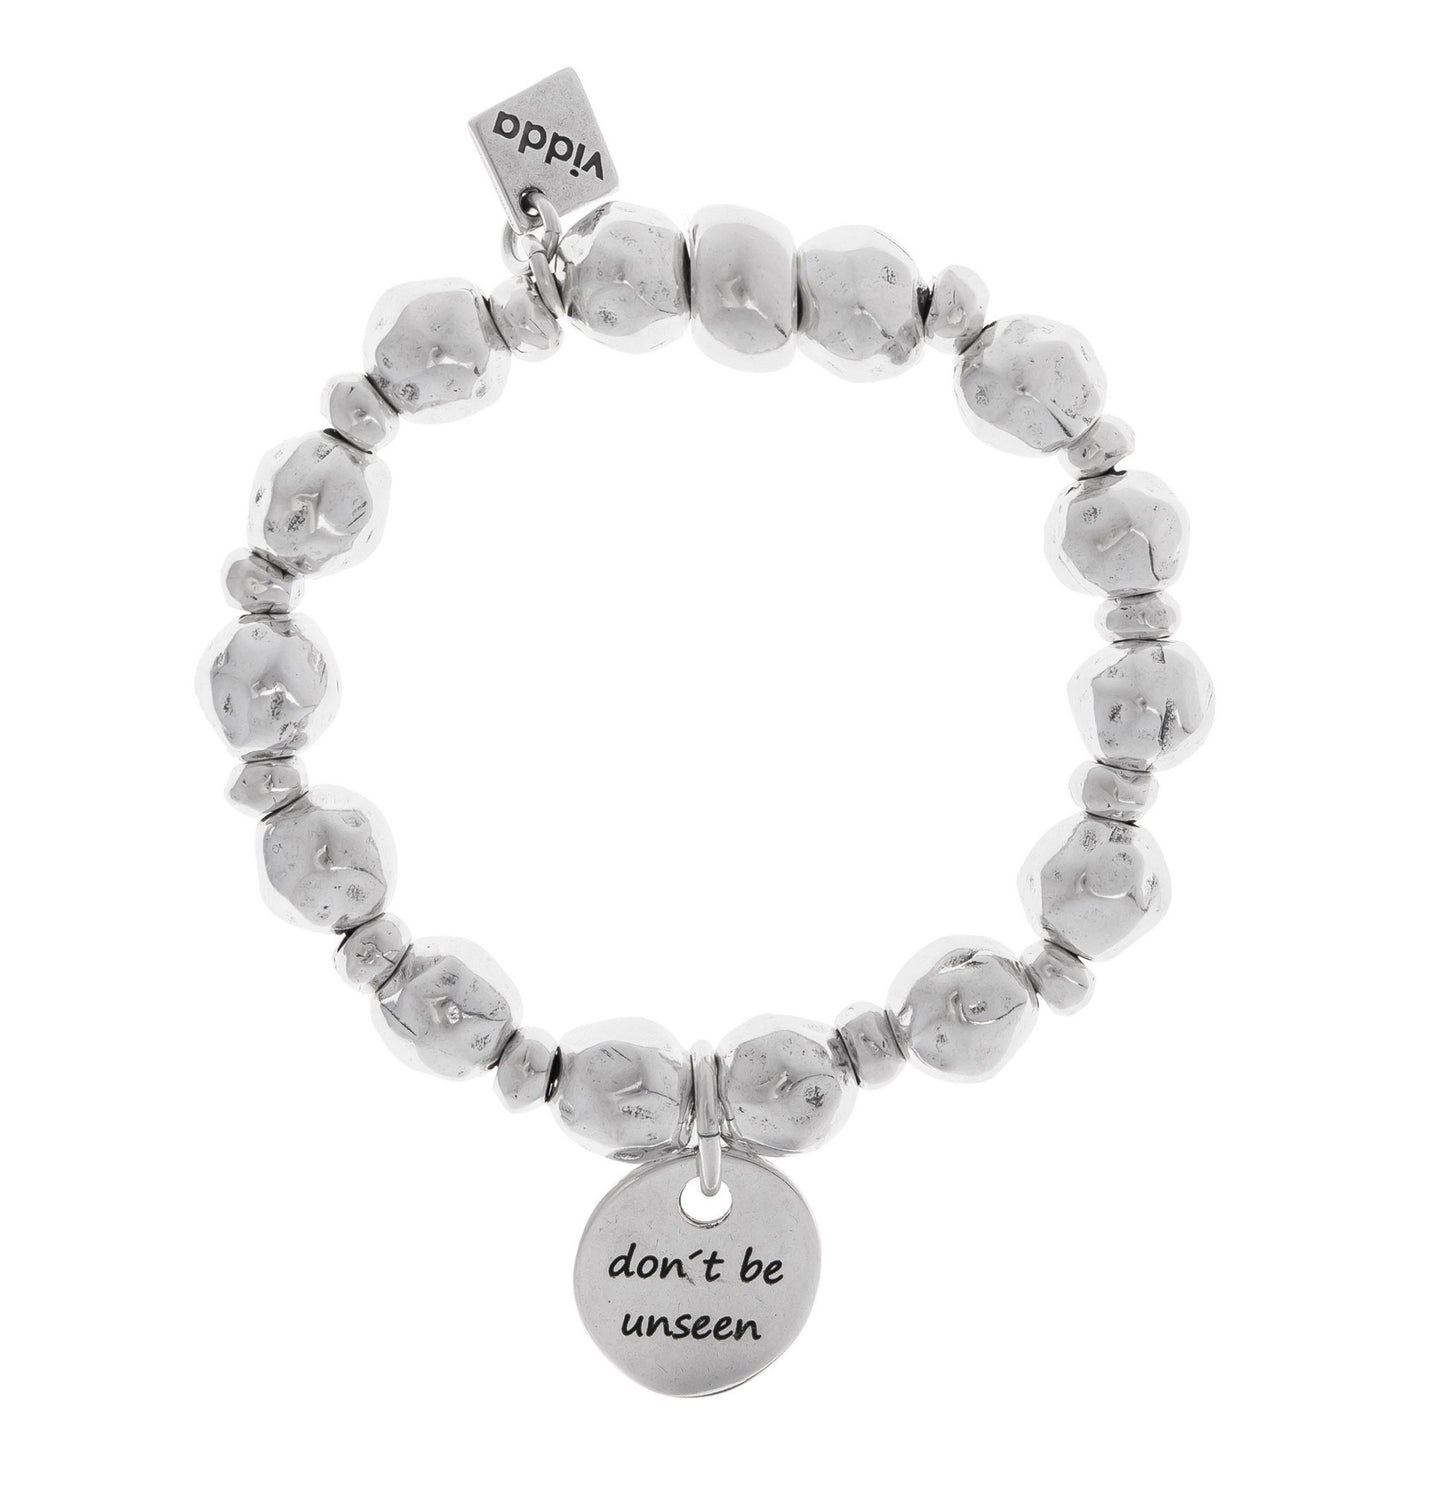 Think Silver Bracelet by Vidda Jewelry